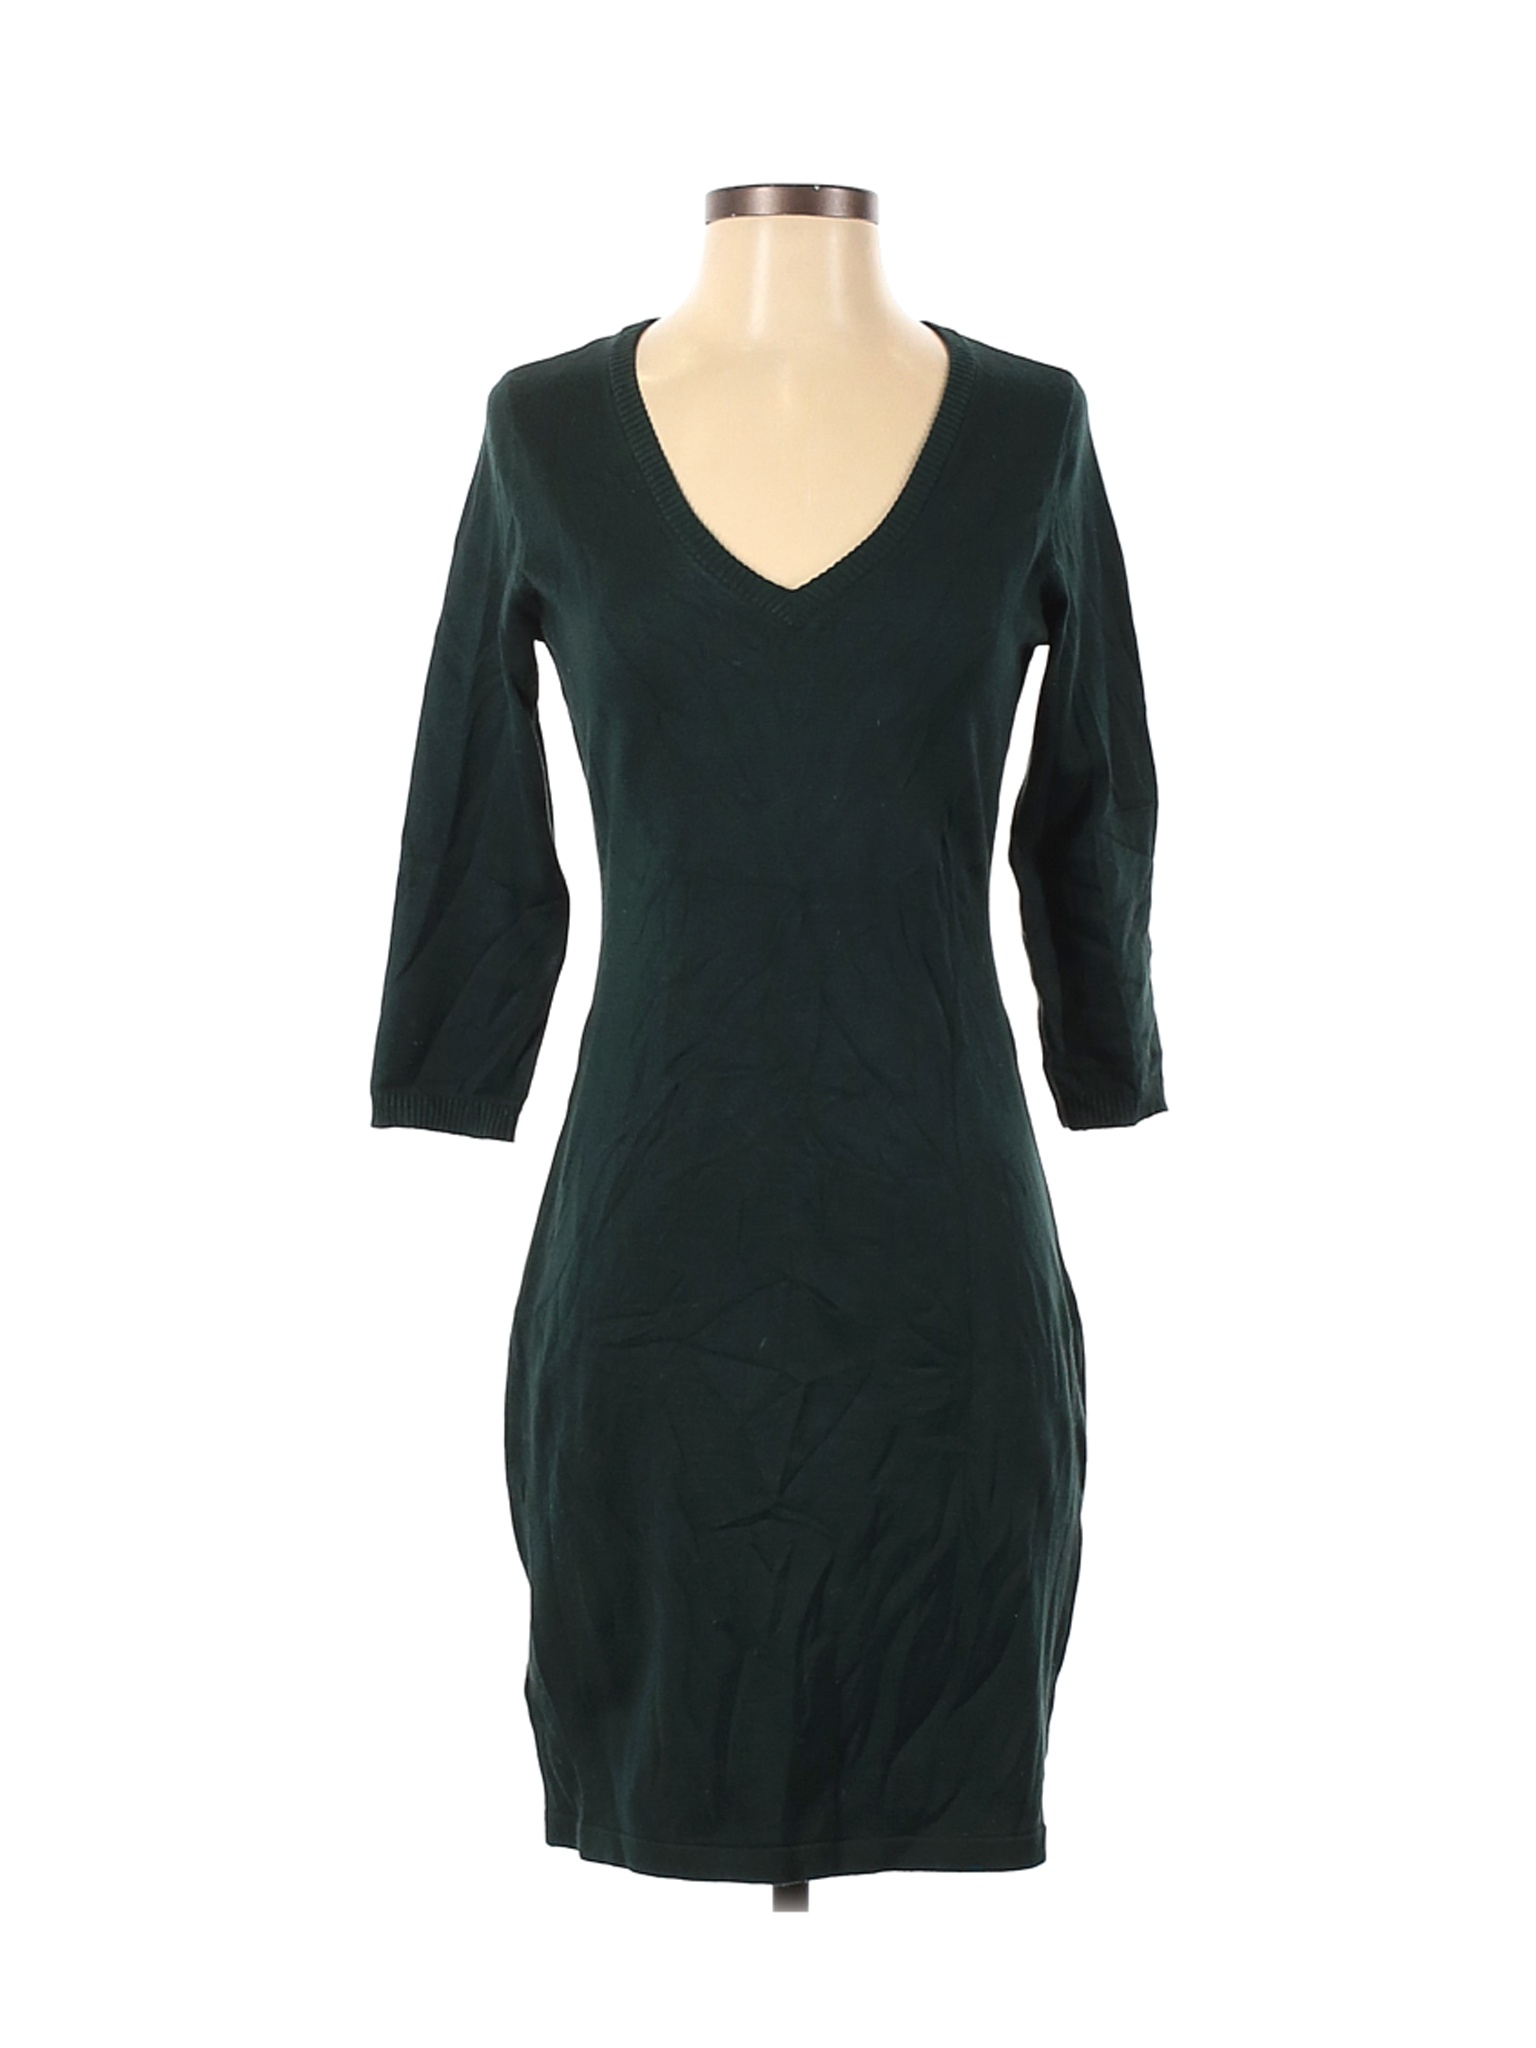 Calvin Klein Women Green Casual Dress S | eBay